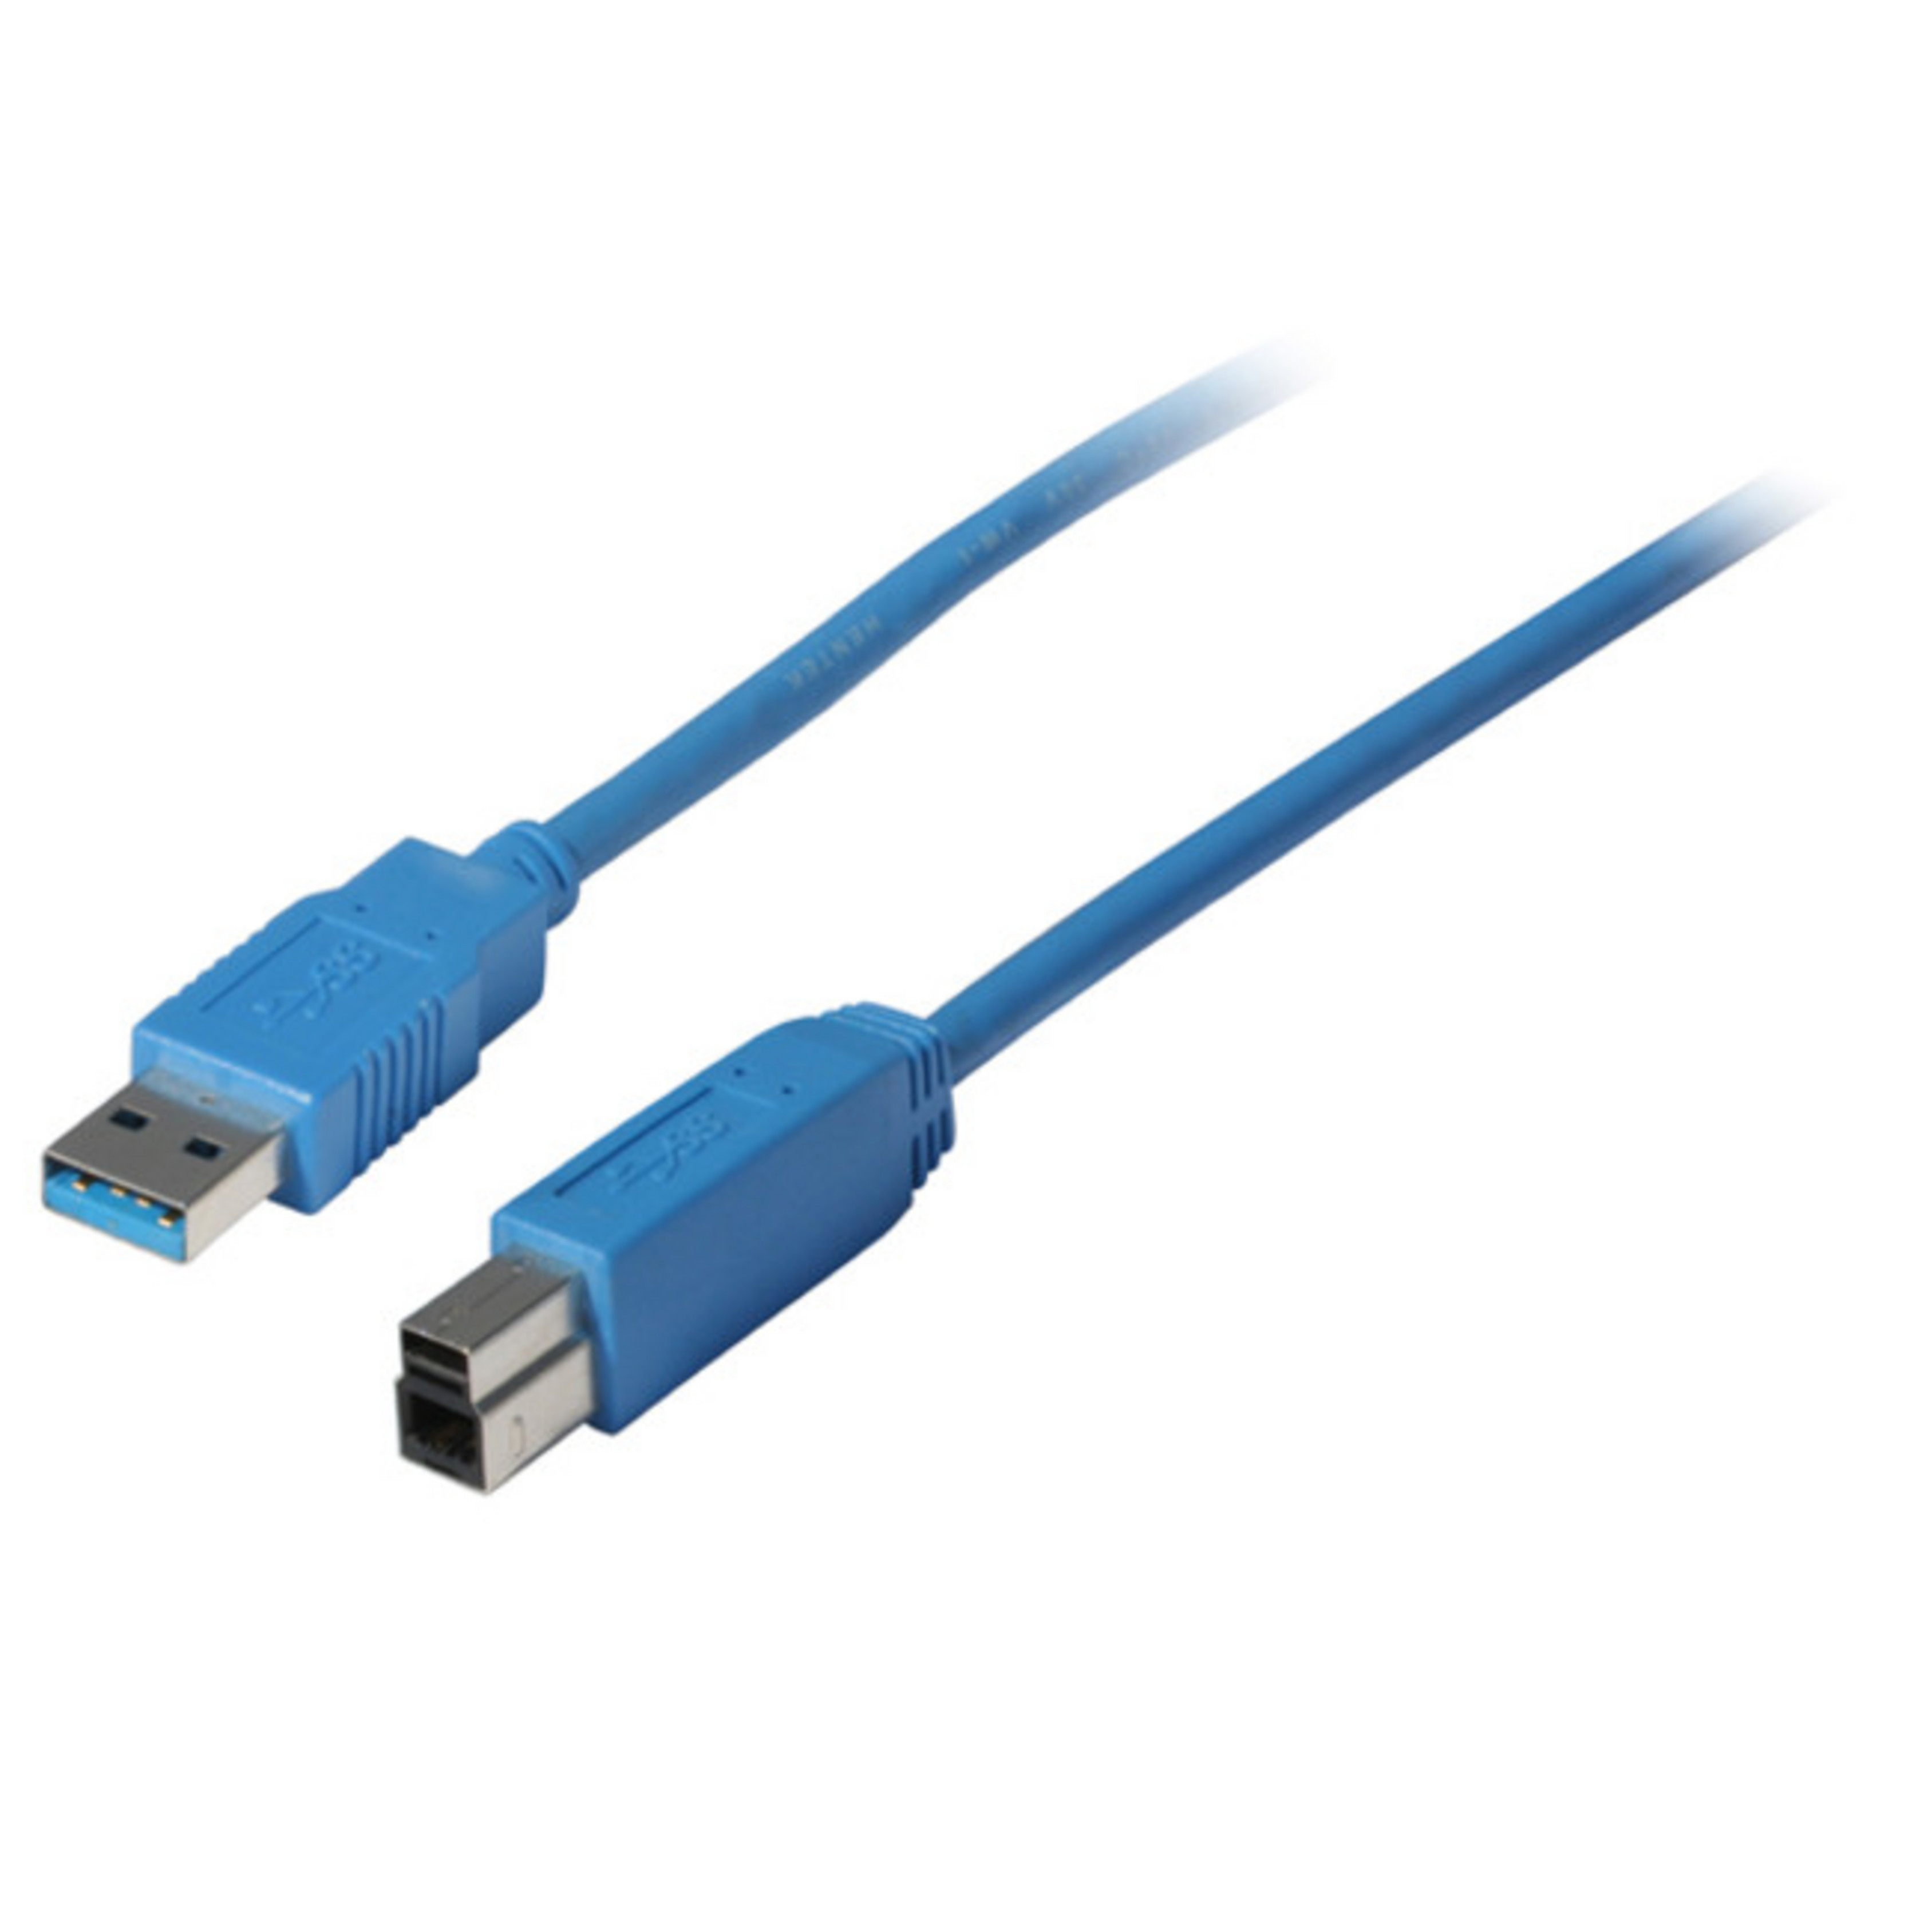 Stecker Kabel USB A Stecker USB S/CONN 3.0 MAXIMUM CONNECTIVITY Kabel blau / USB 1m B